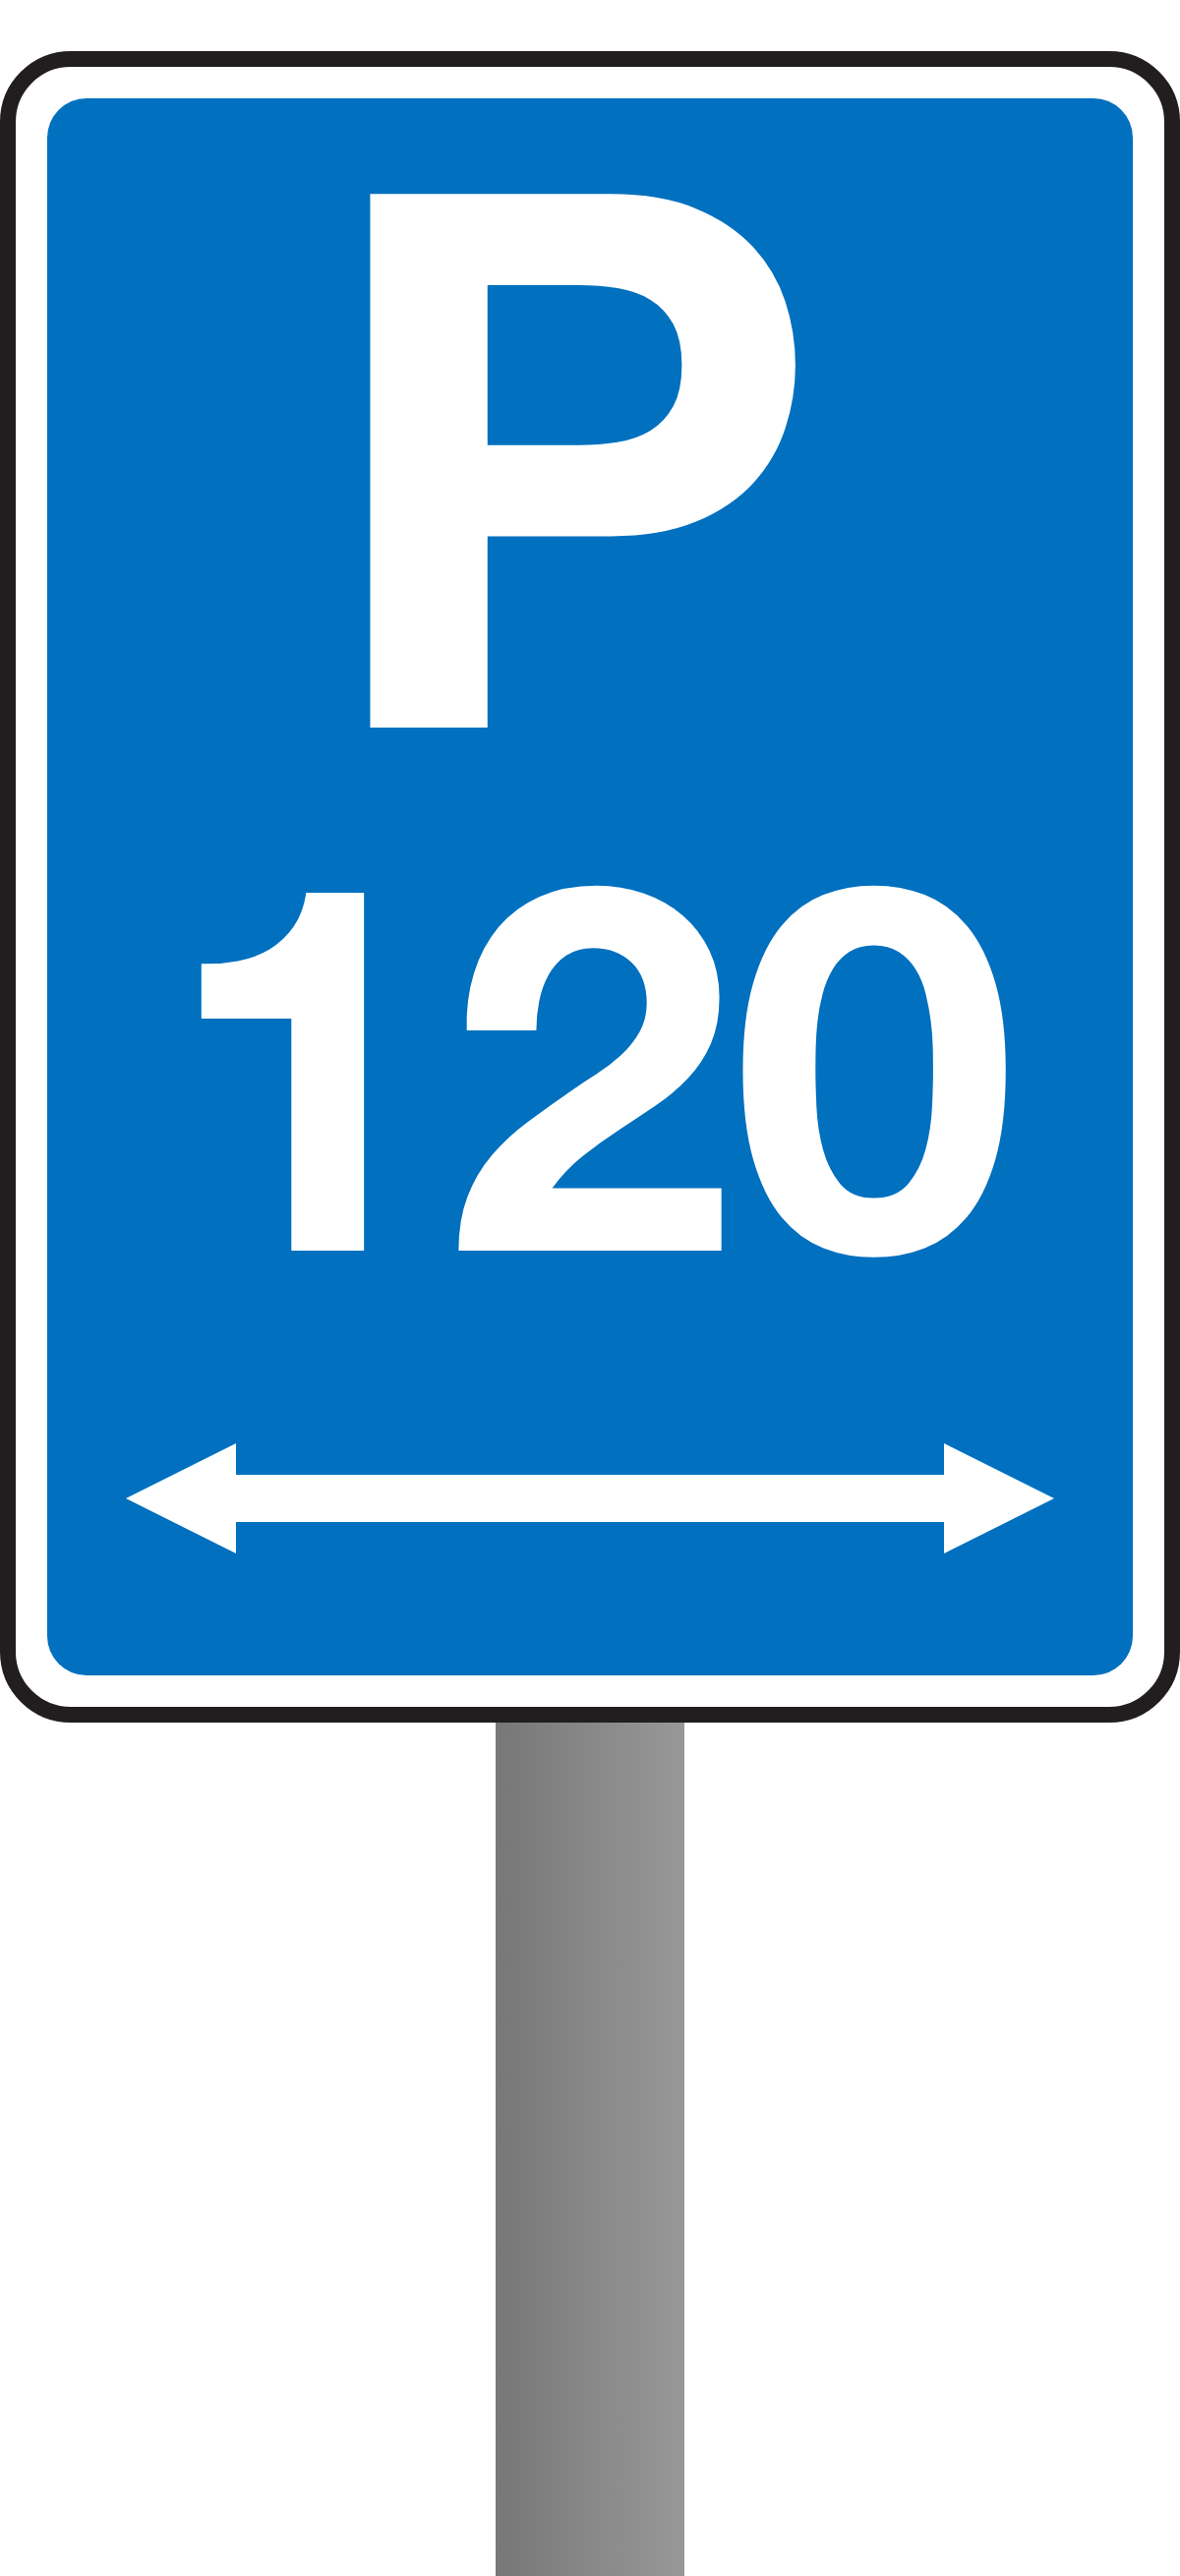 P120 Parking Sign